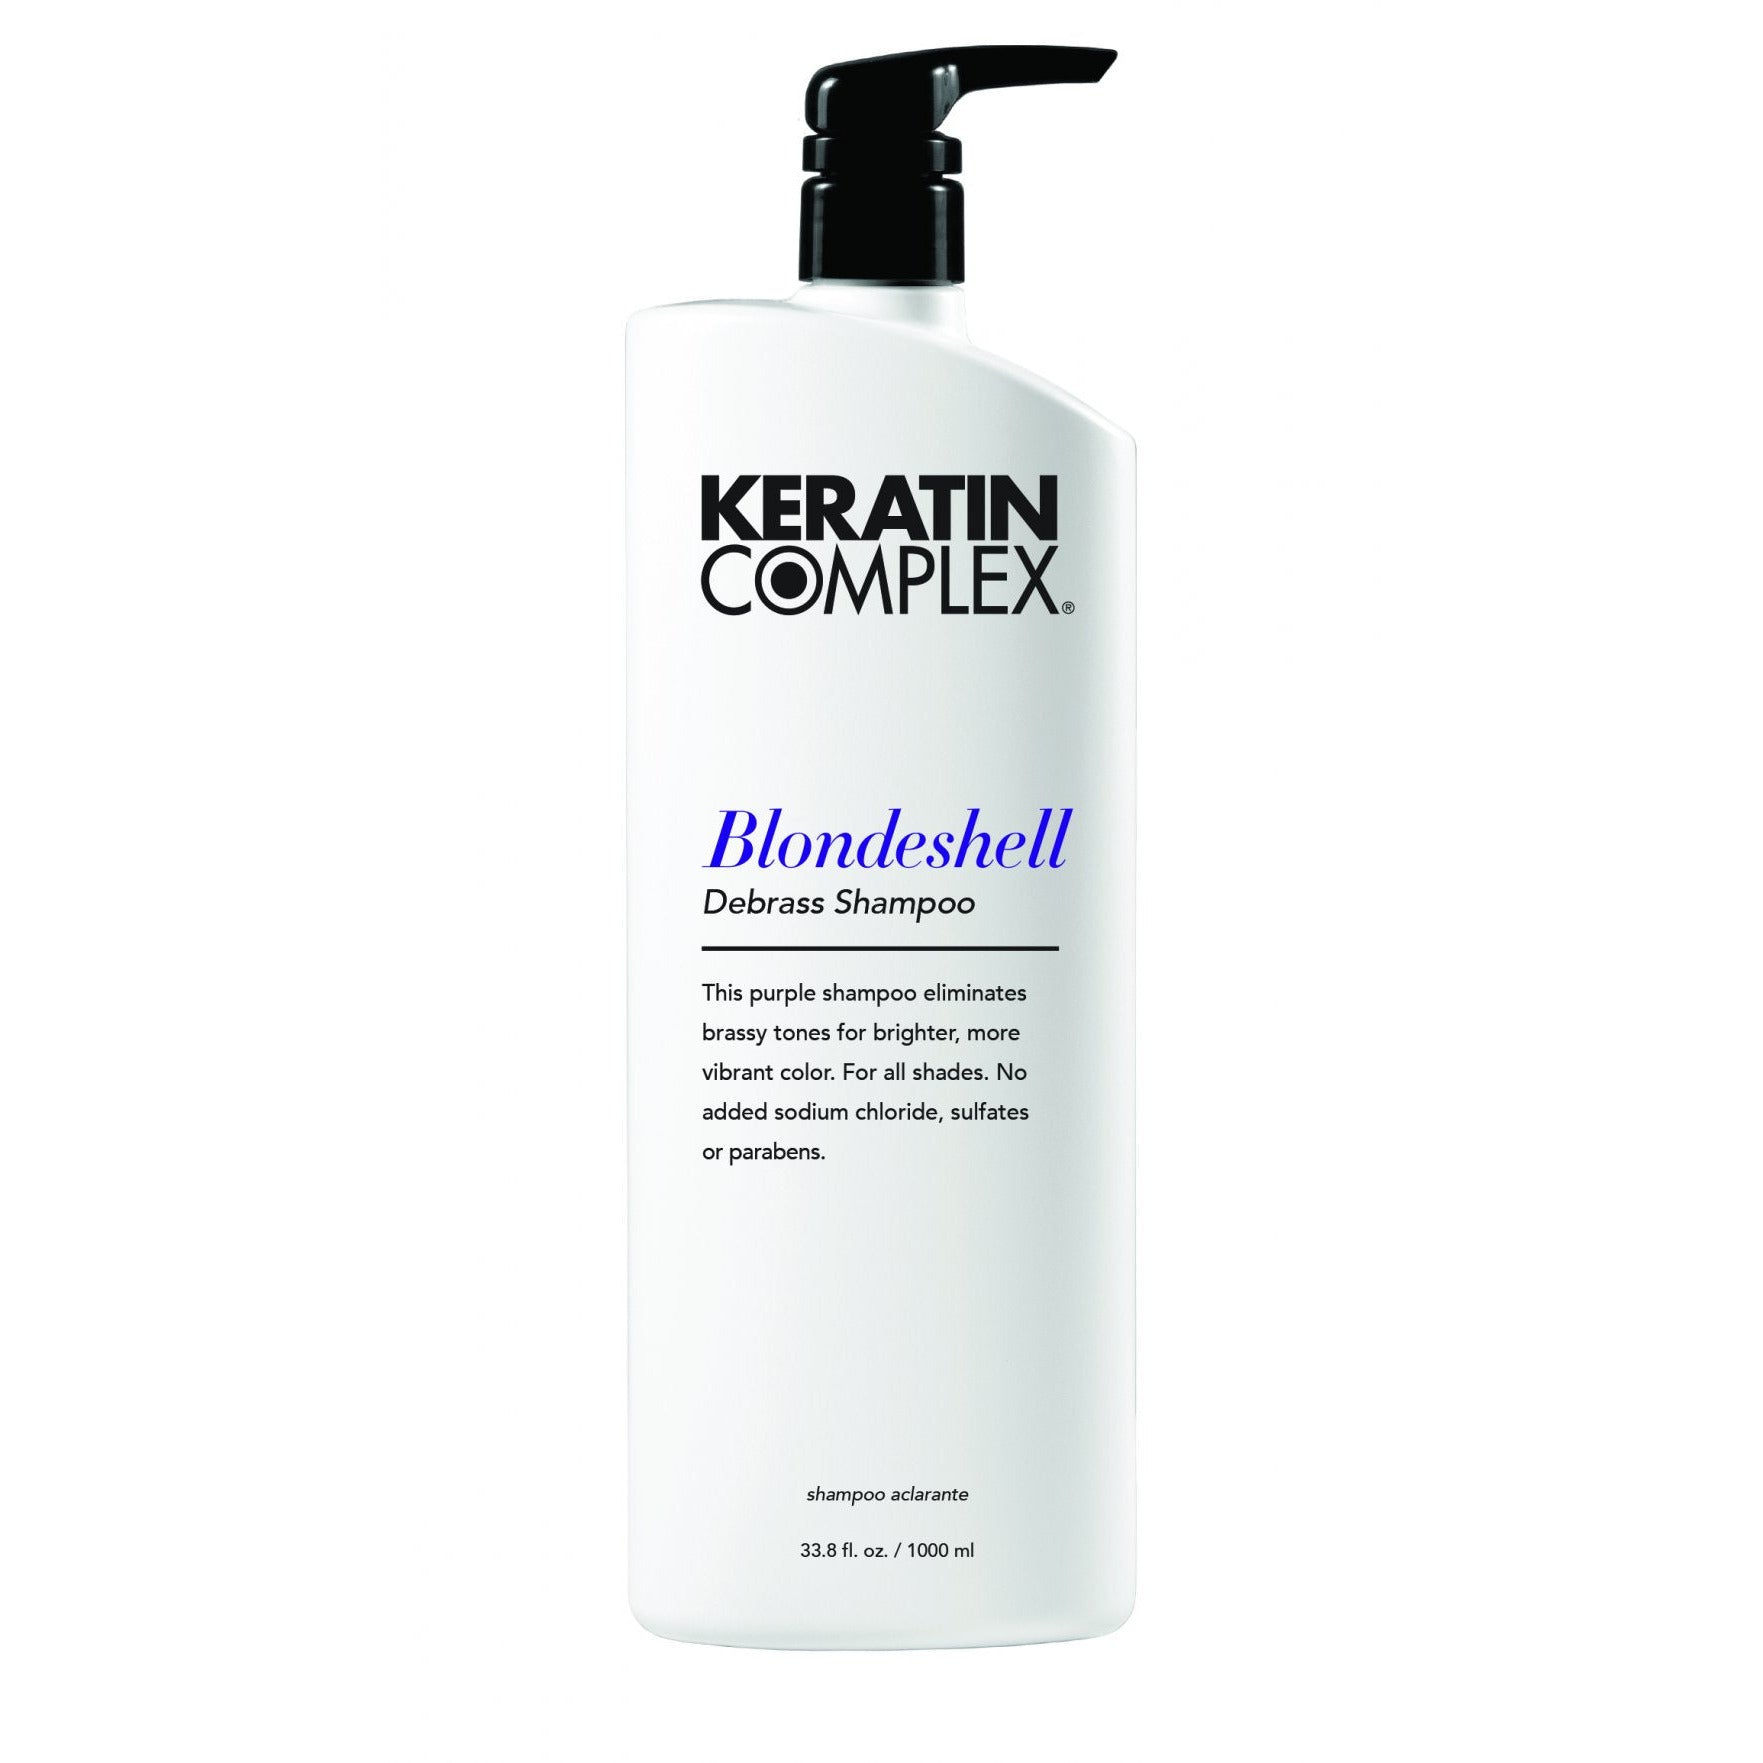 Keratin Complex Blondeshell Shampoo